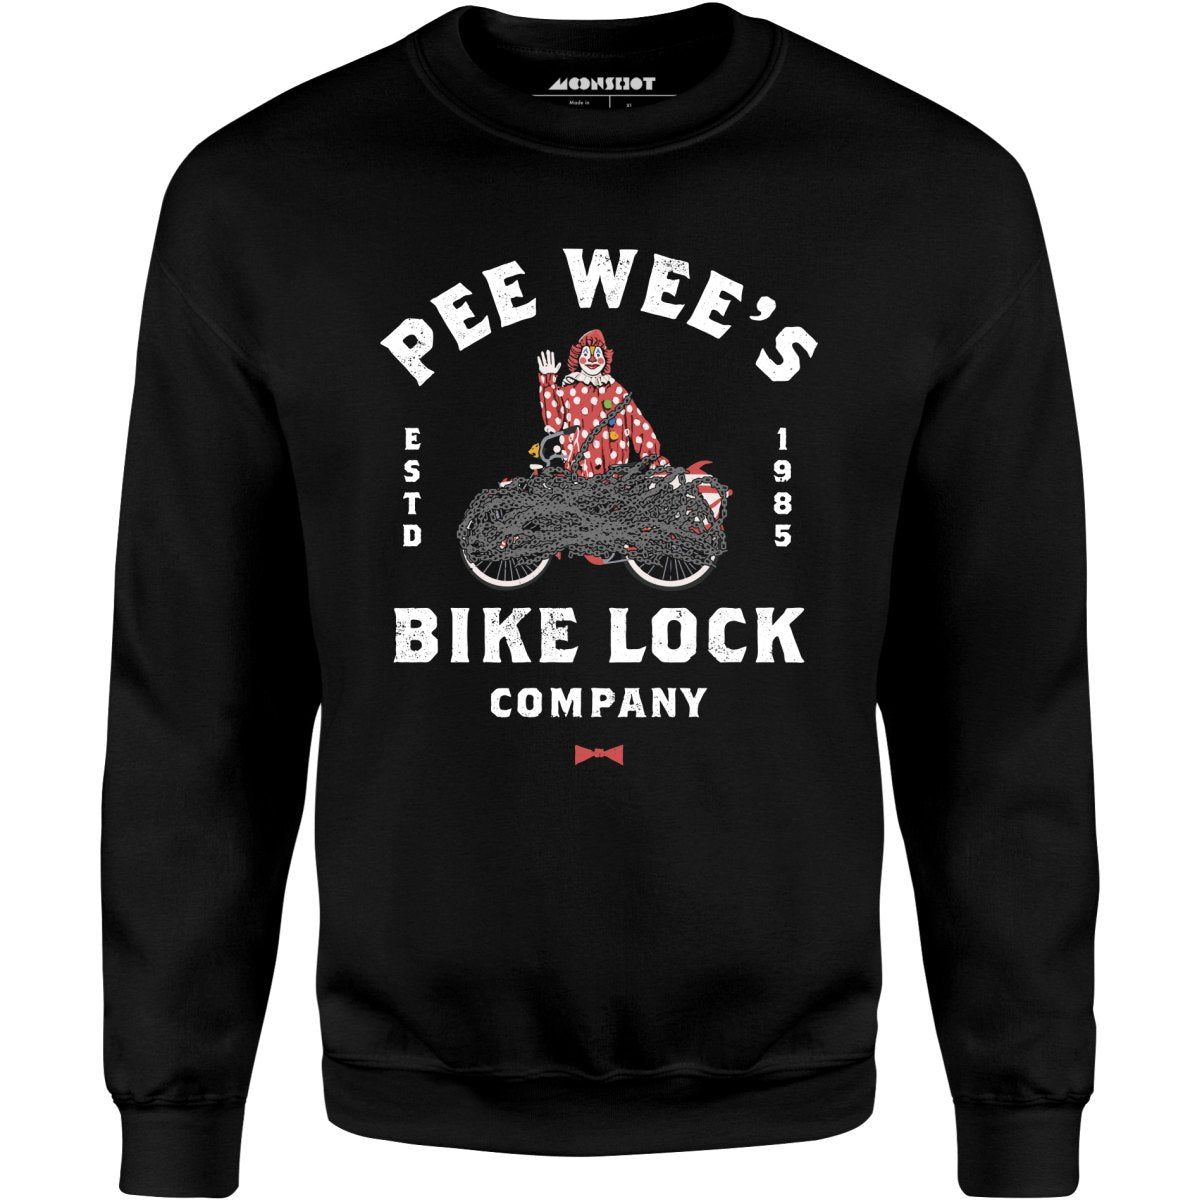 Pee Wee's Bike Lock Company - Unisex Sweatshirt